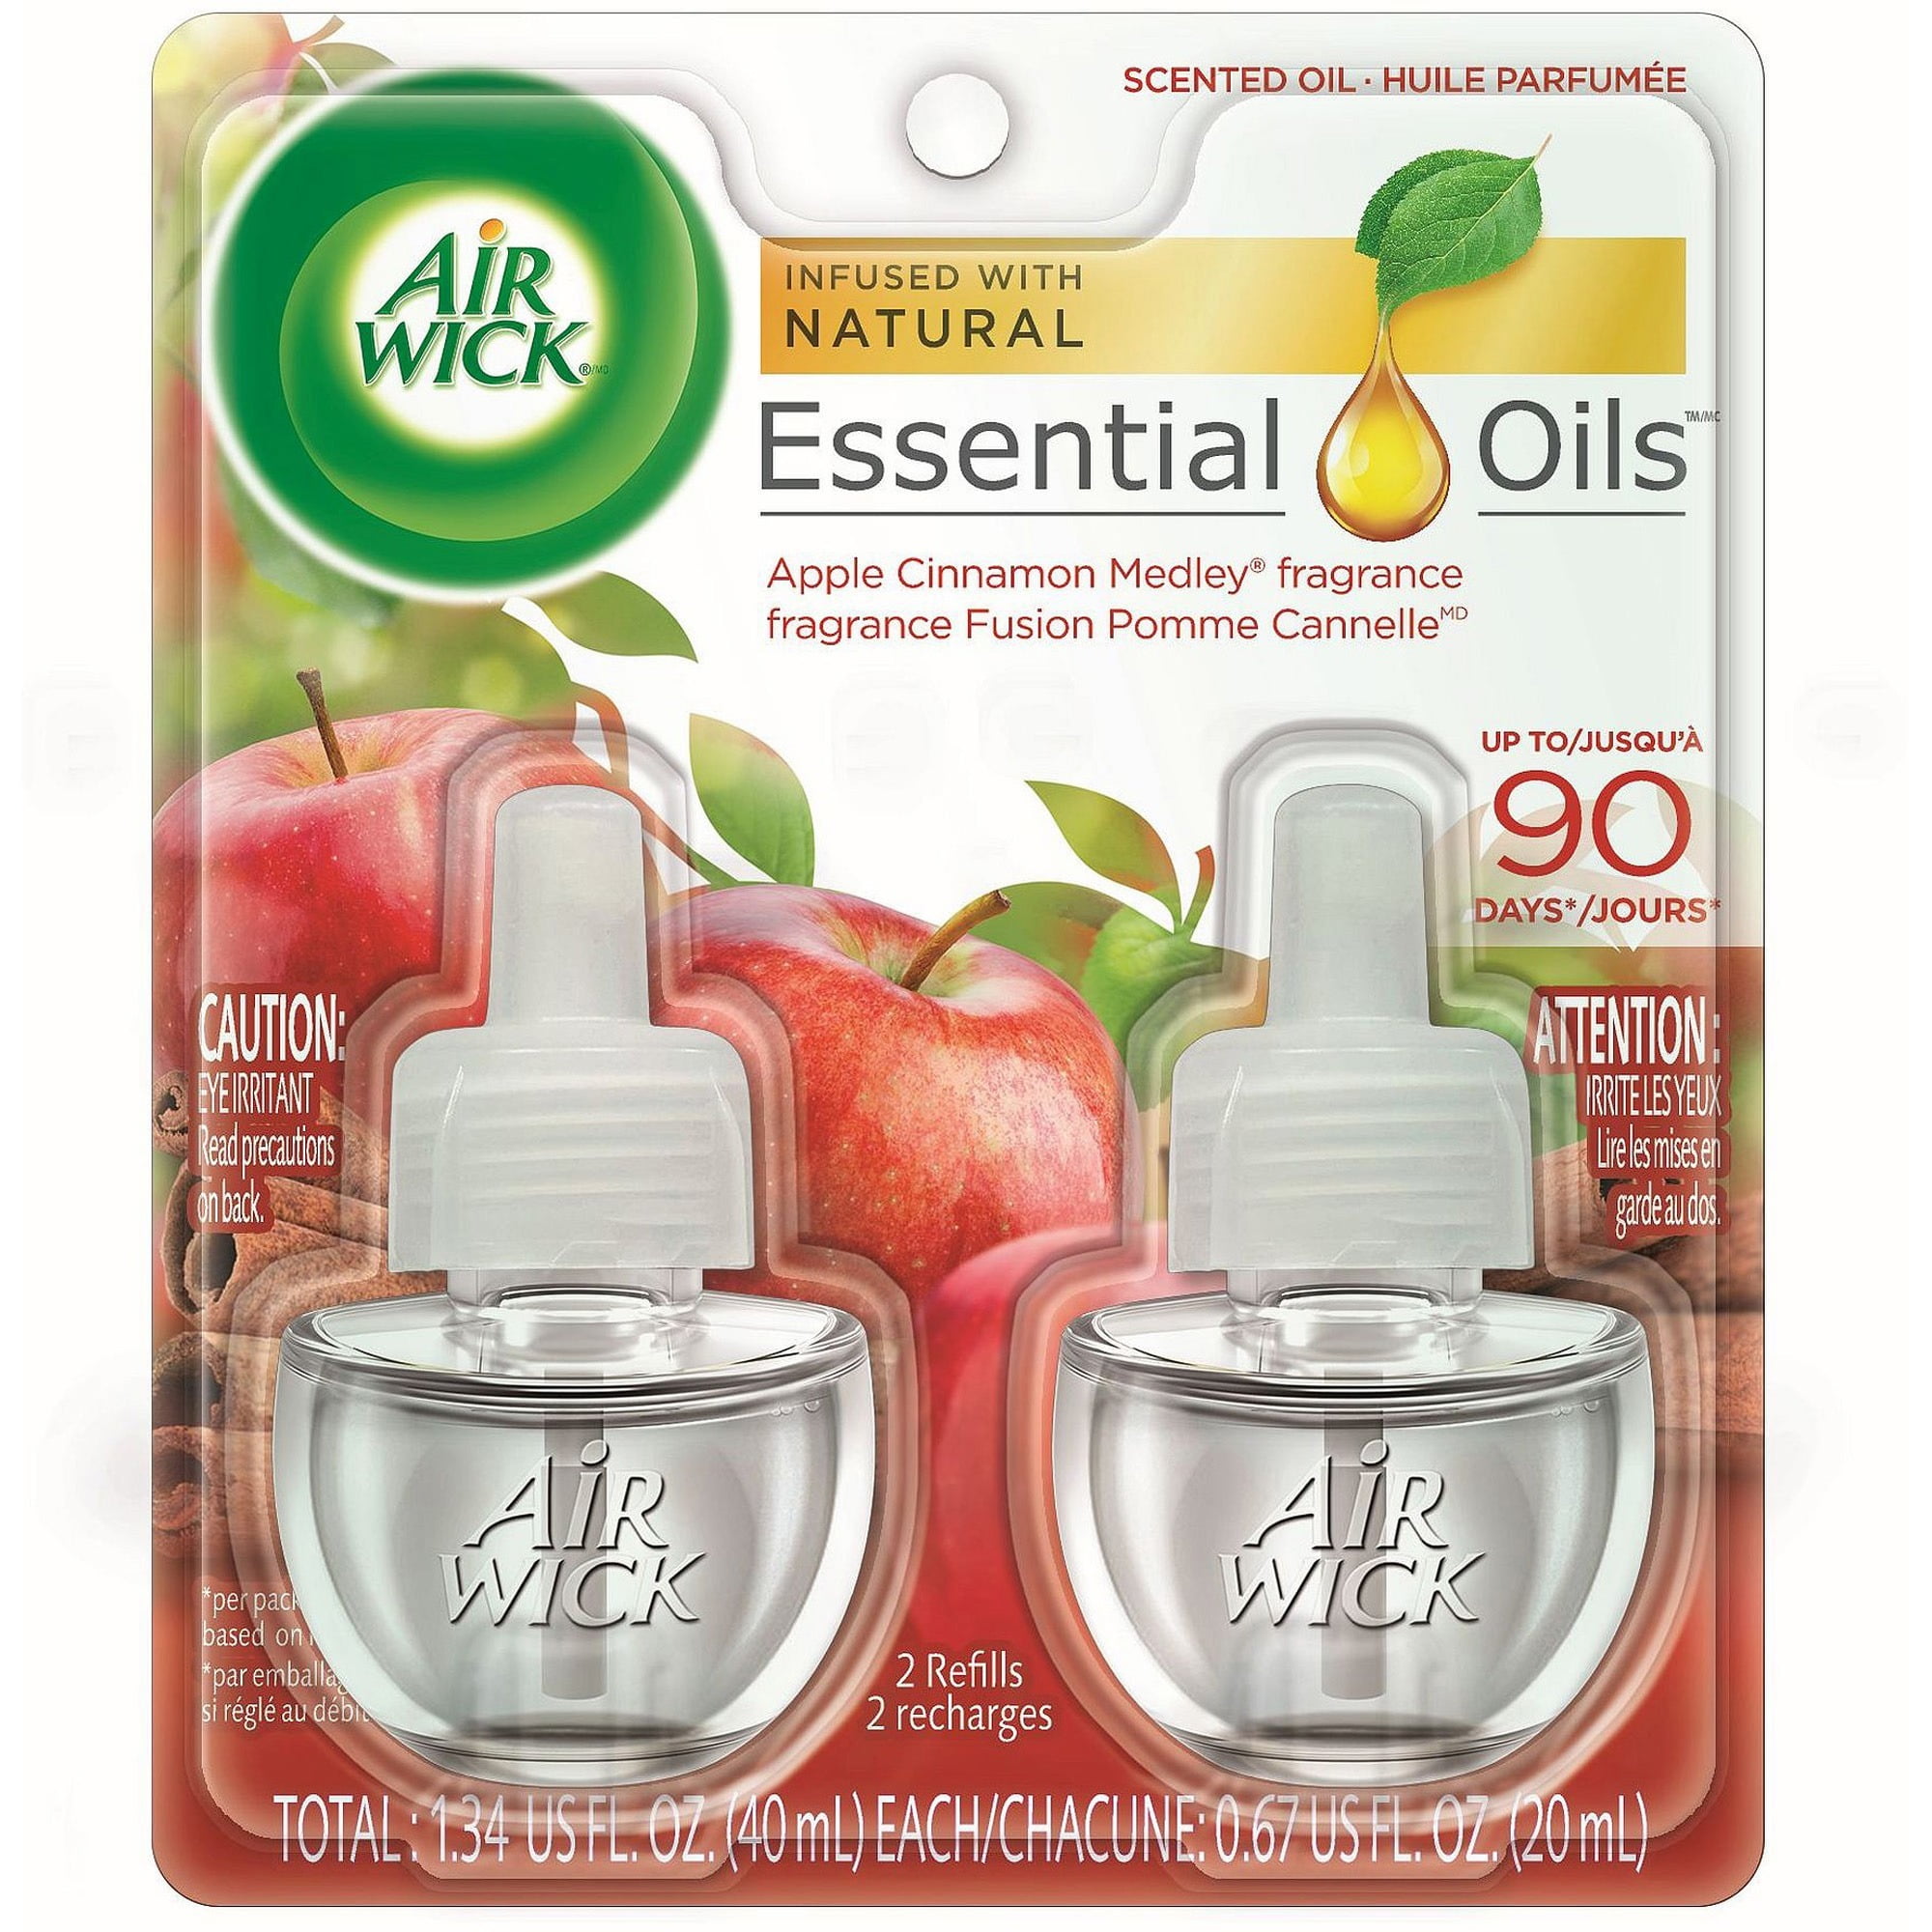 Air Wick Essential Oils Scented Oil, Apple Cinnamon Medley